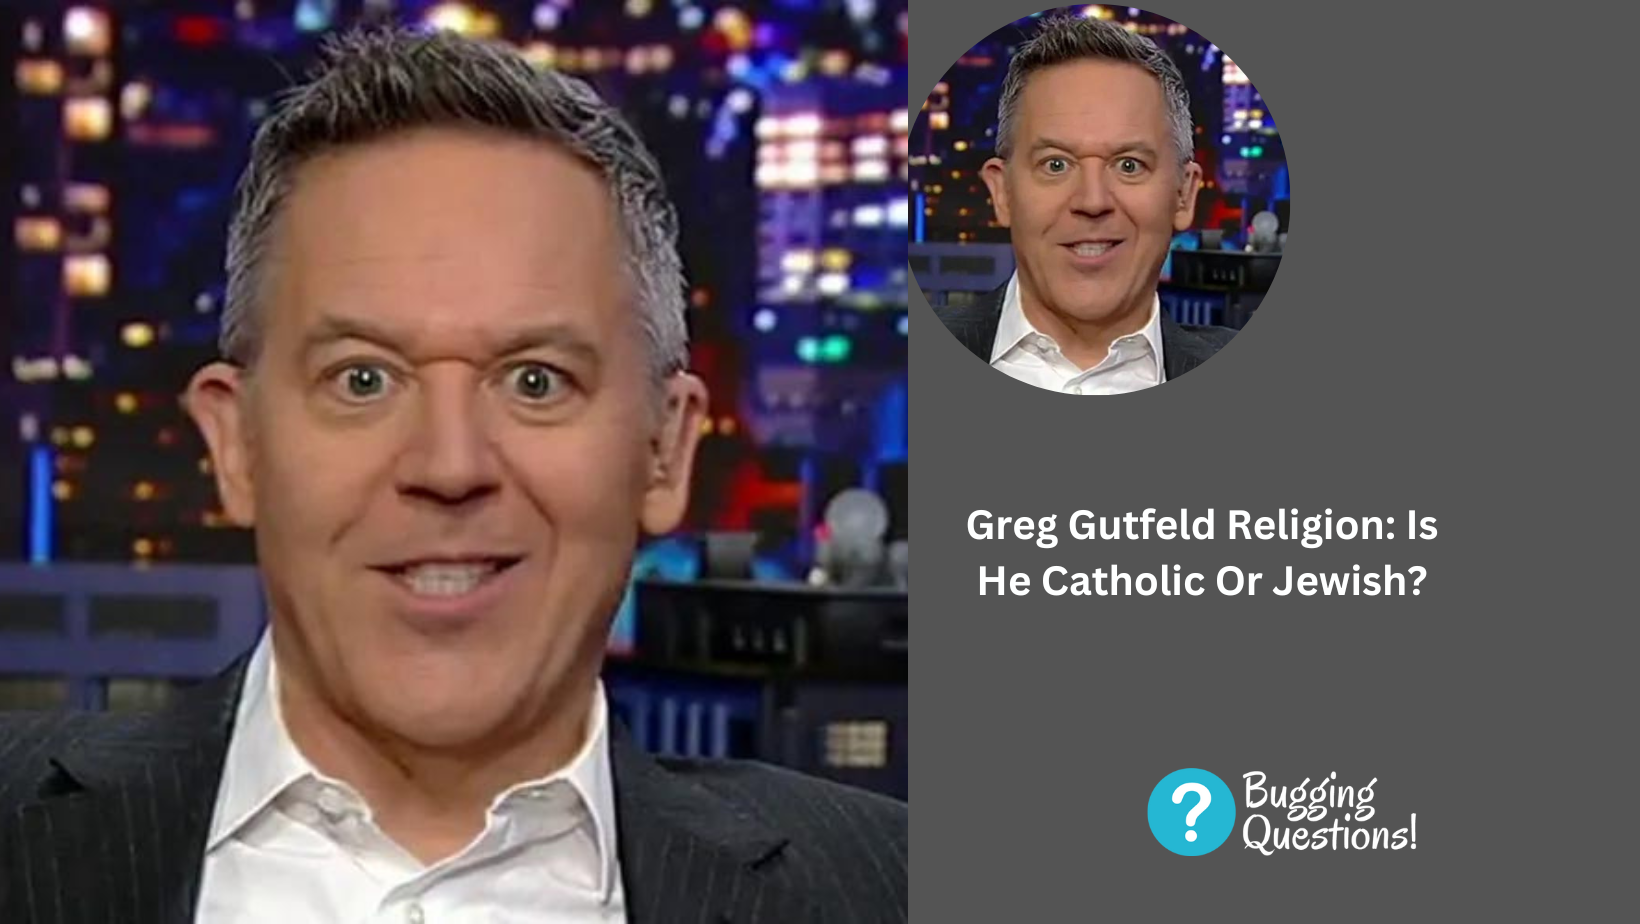 Greg Gutfeld Religion: Is He Catholic Or Jewish?